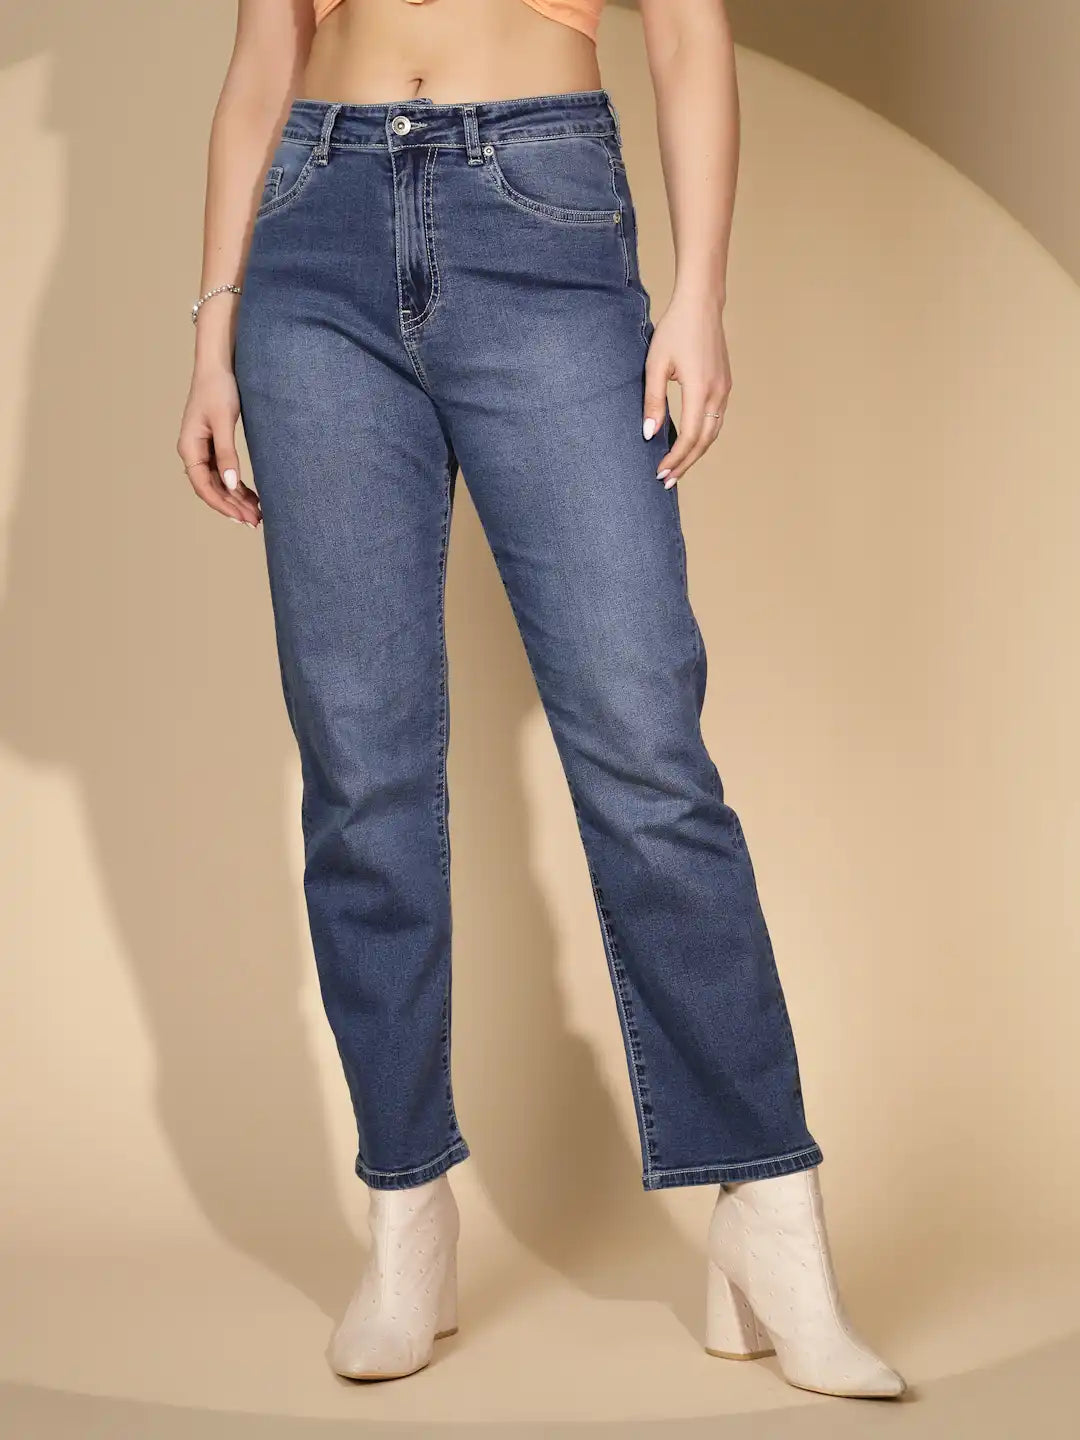 Blue Denim Straight  Fit Jeans For Women - Global Republic #